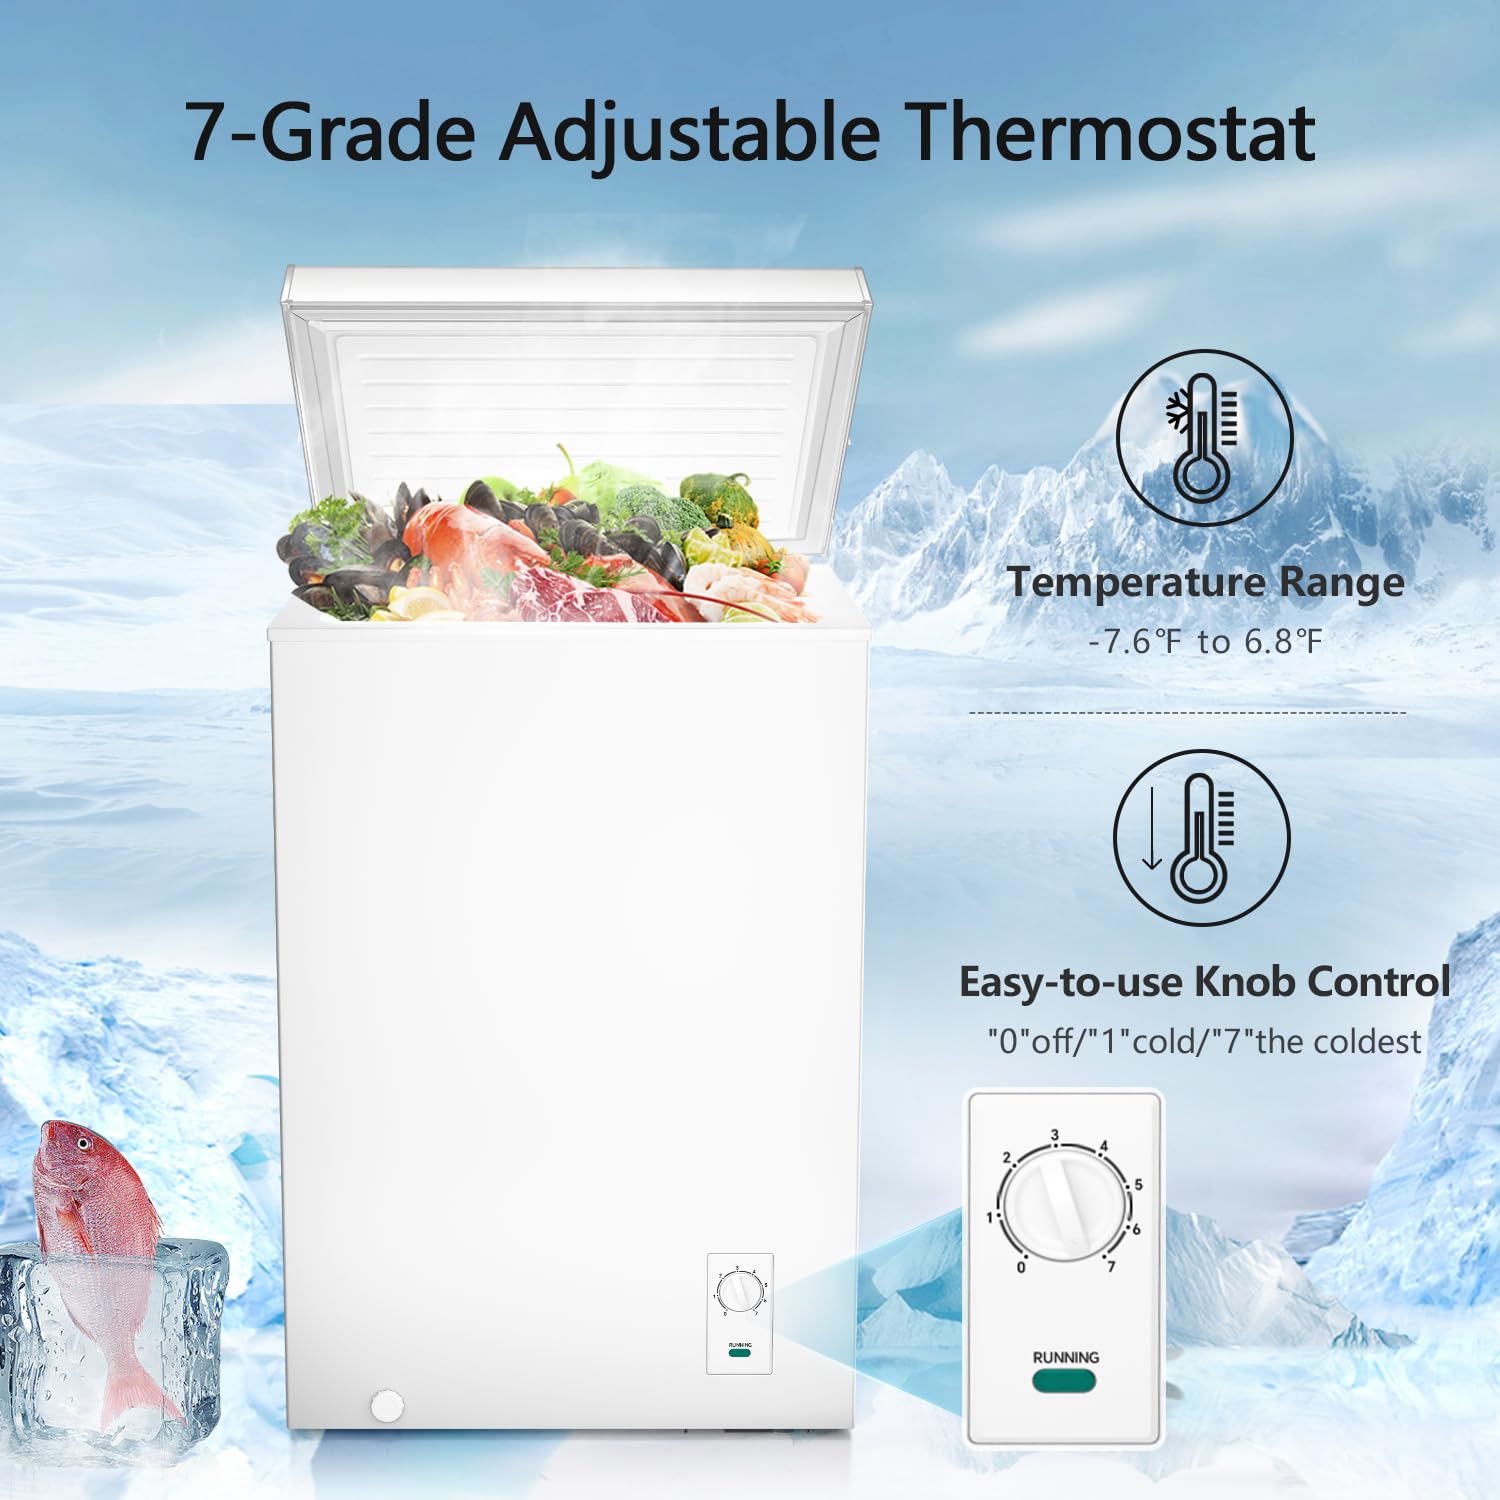 R.W.FLAME Chest Freezer 2.8 Cubic Feet, Deep Freezer with Basket Adjustable Temperature, Energy Saving, Top open Door Compact Freezer, White